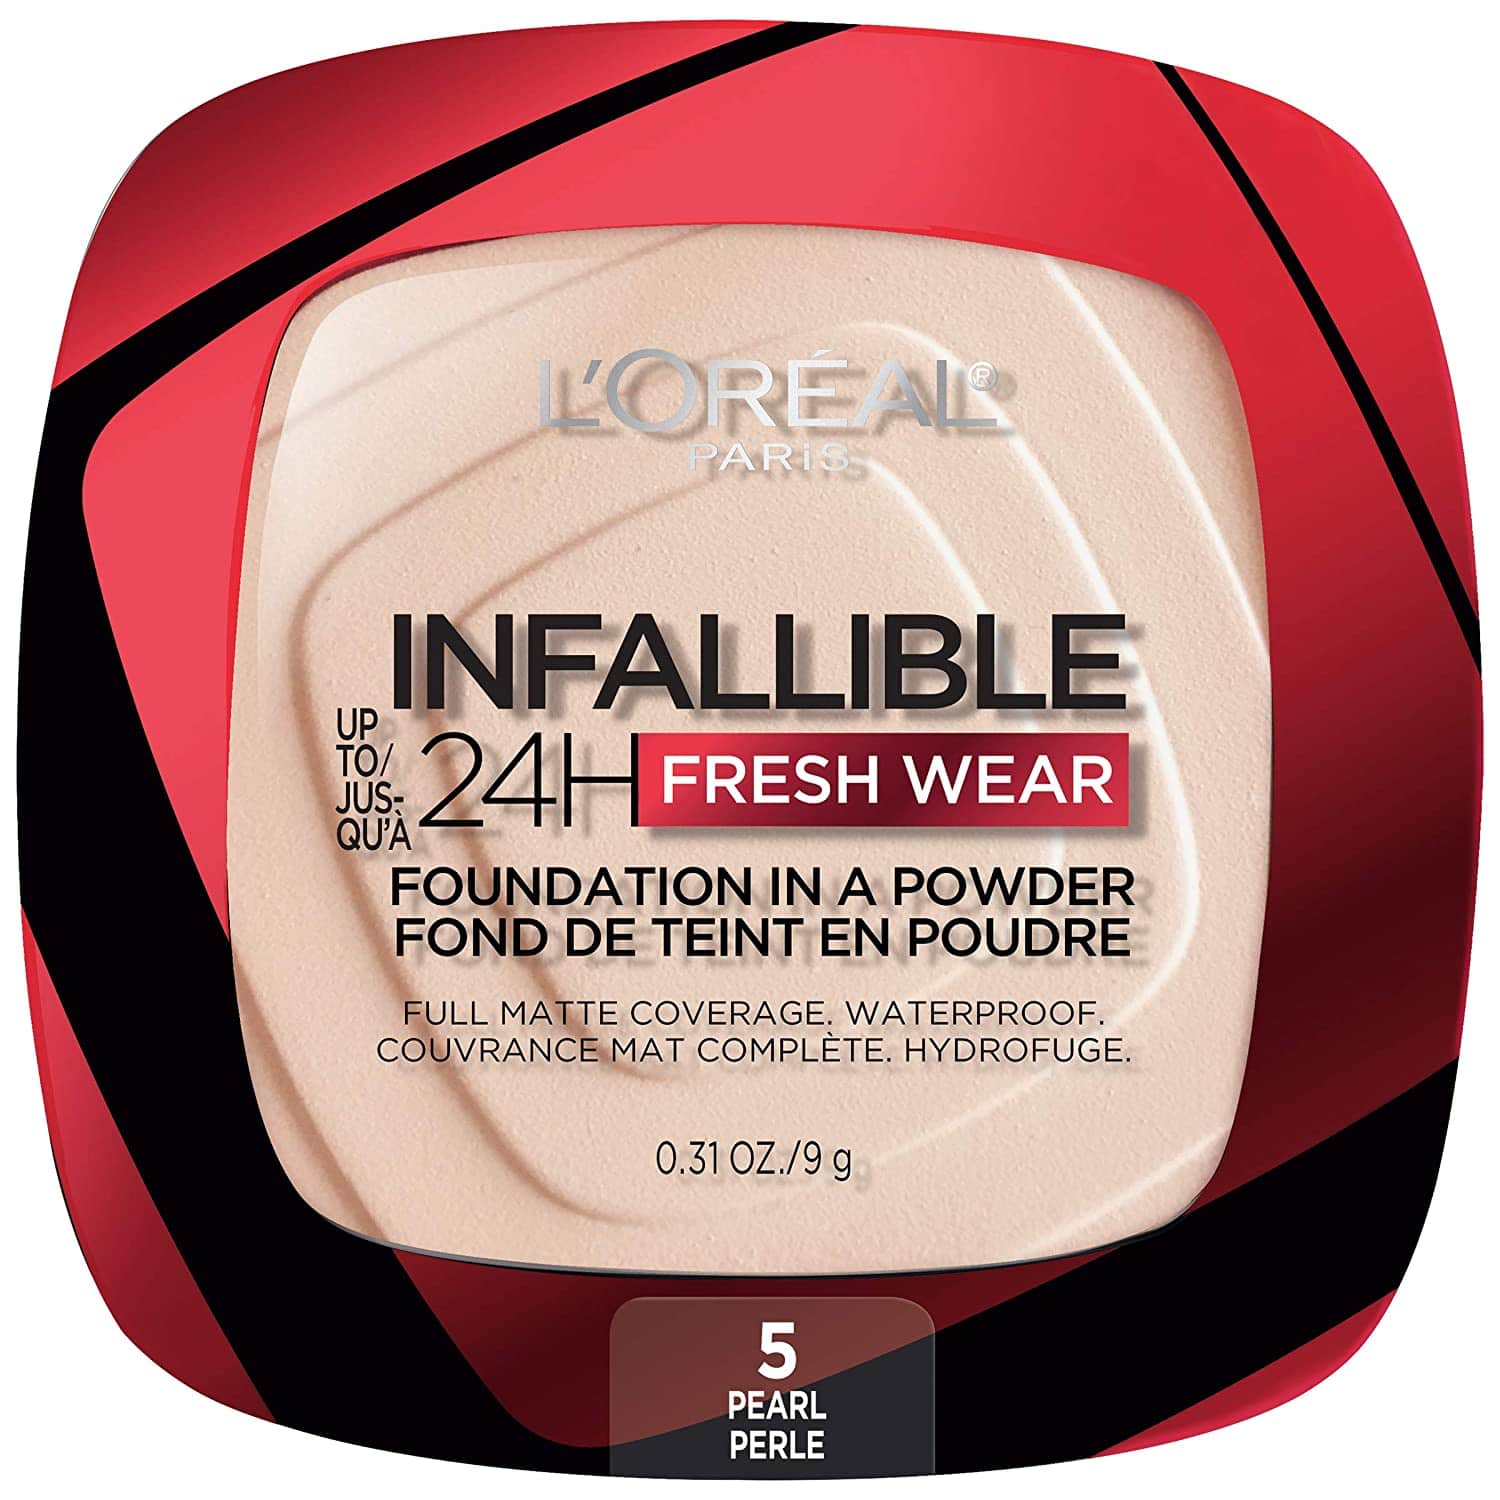 Infallible 24h Fresh Wear Foundation-in-a-Powder-L’Oréal-Paris